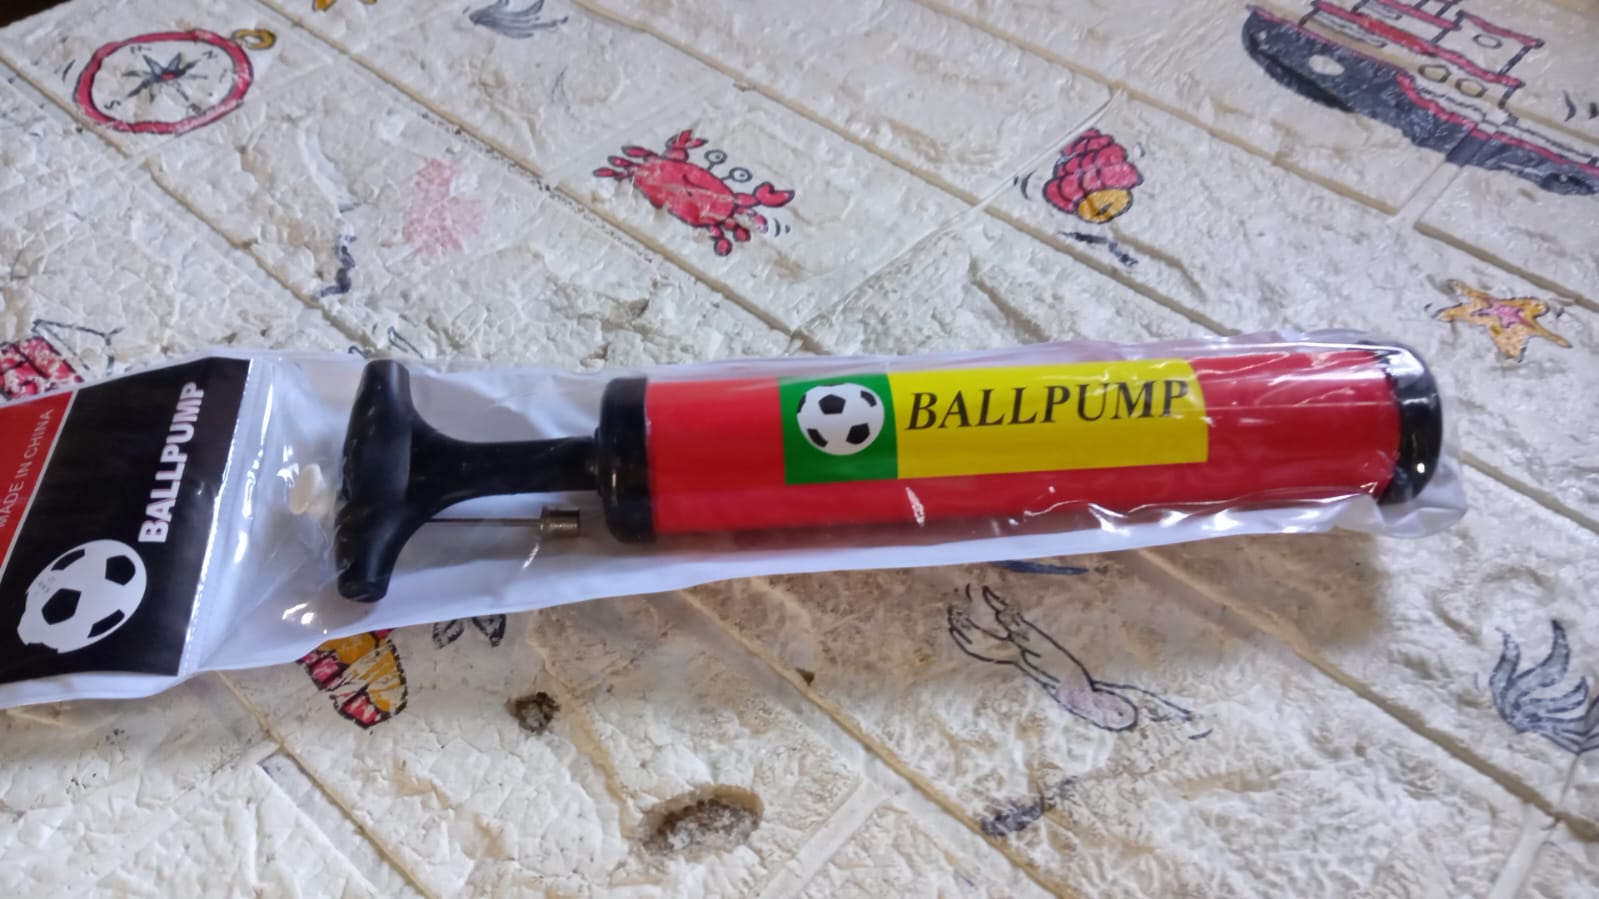 Inflator Air Ball Pump Soft Bouncing Ball Development Kids Toy, Sports Plastic Pump for Soccer, Basketball, Football, Volleyball Ball (24 CM & 33.5 Cm) - deal99.in